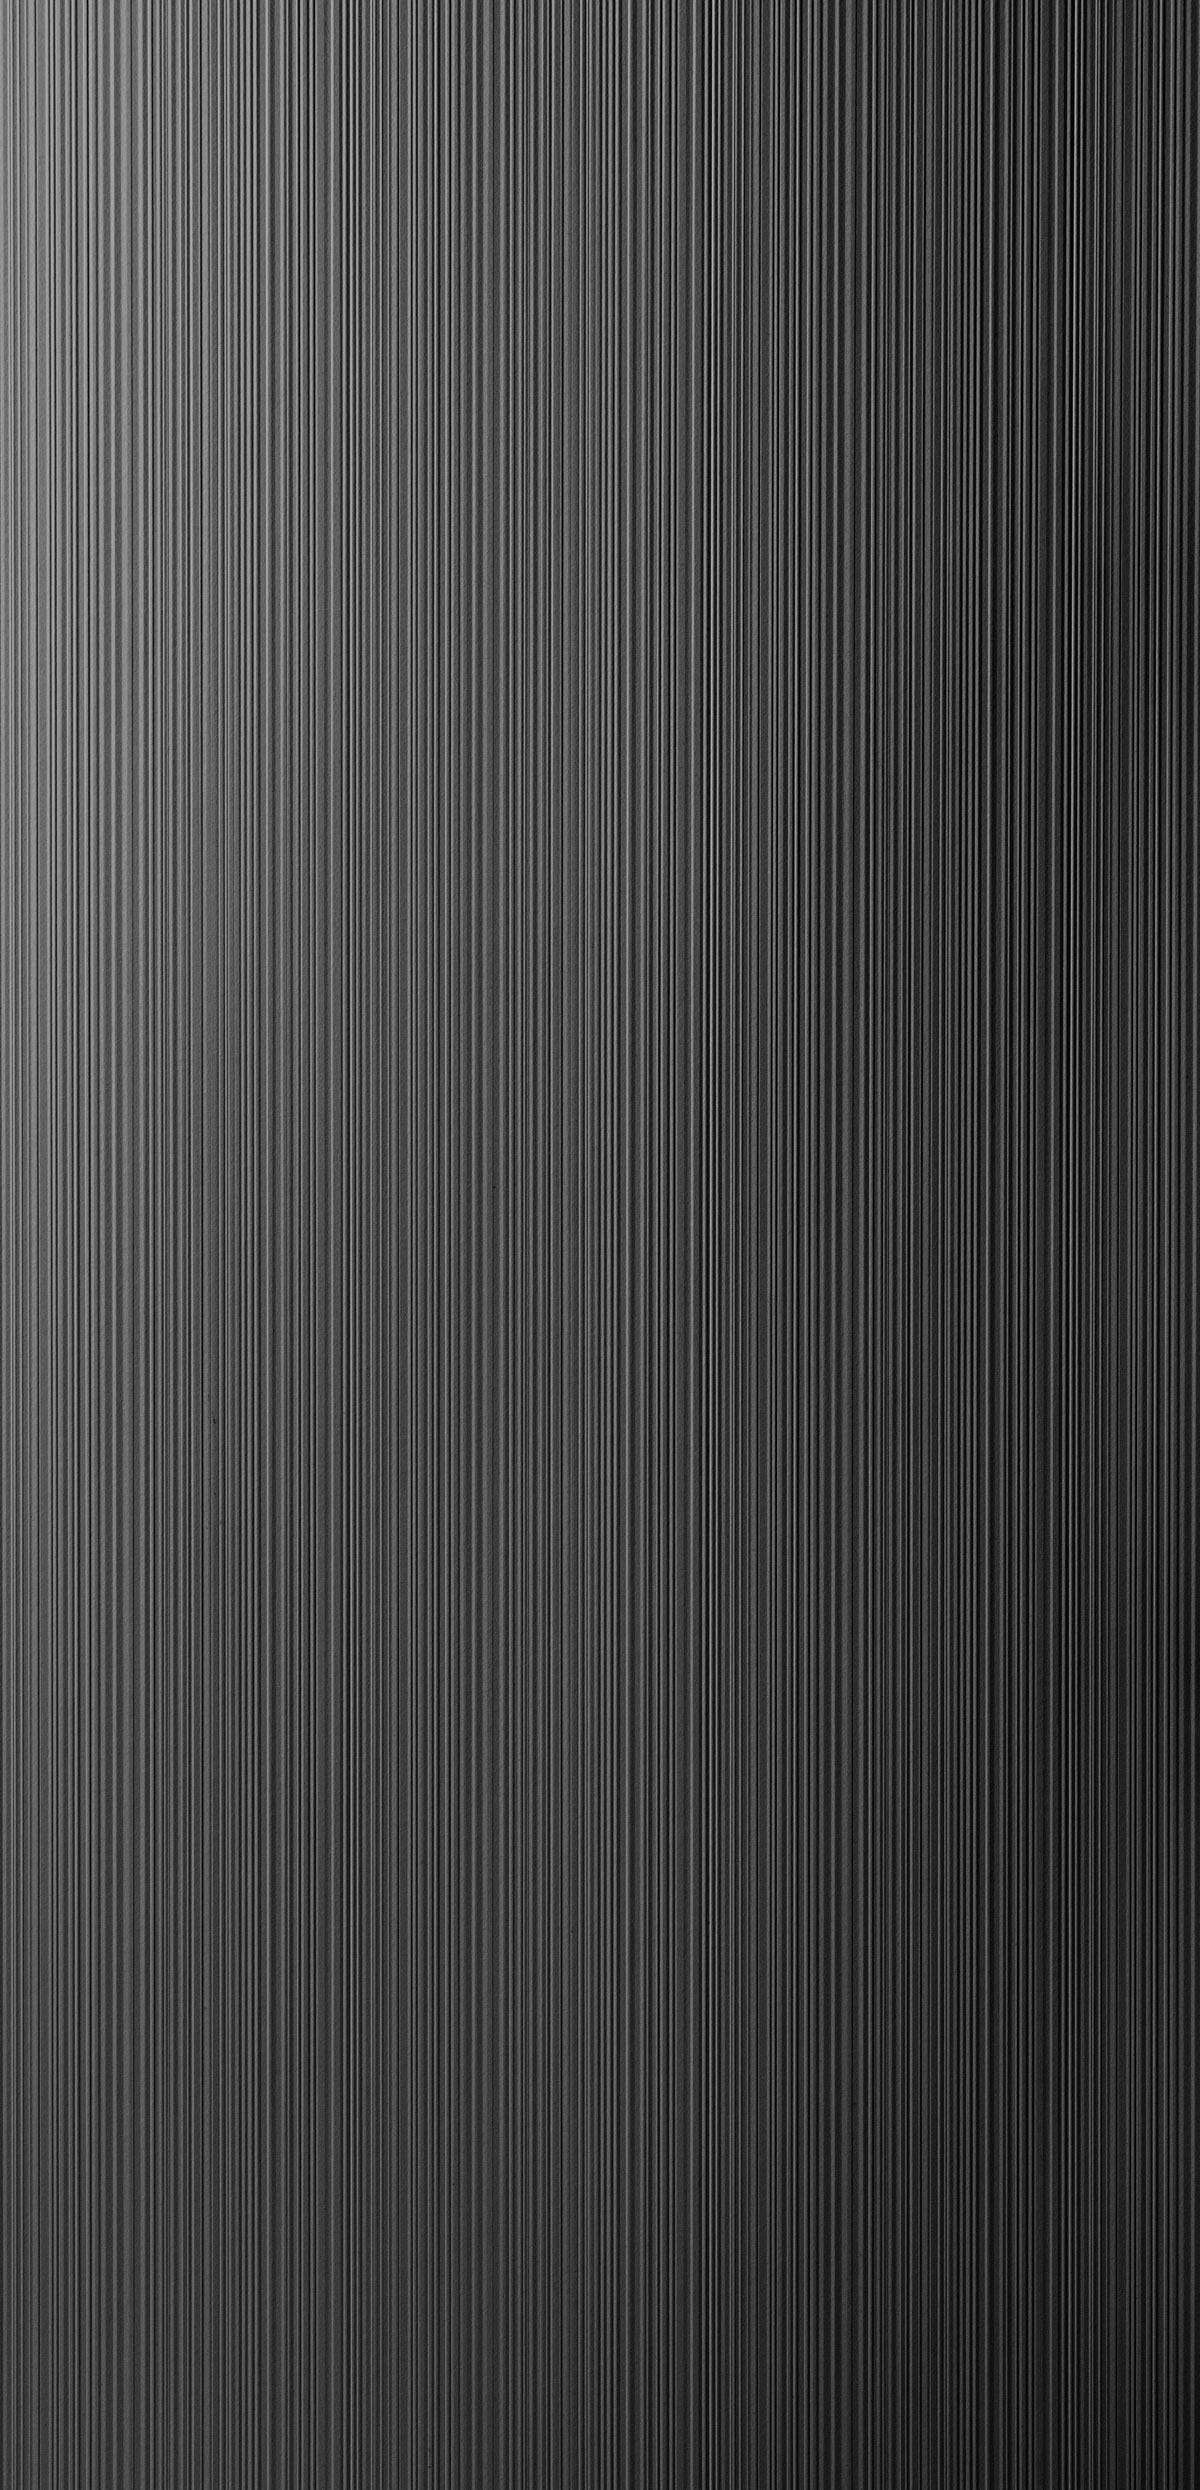 Lines Black 009-panel